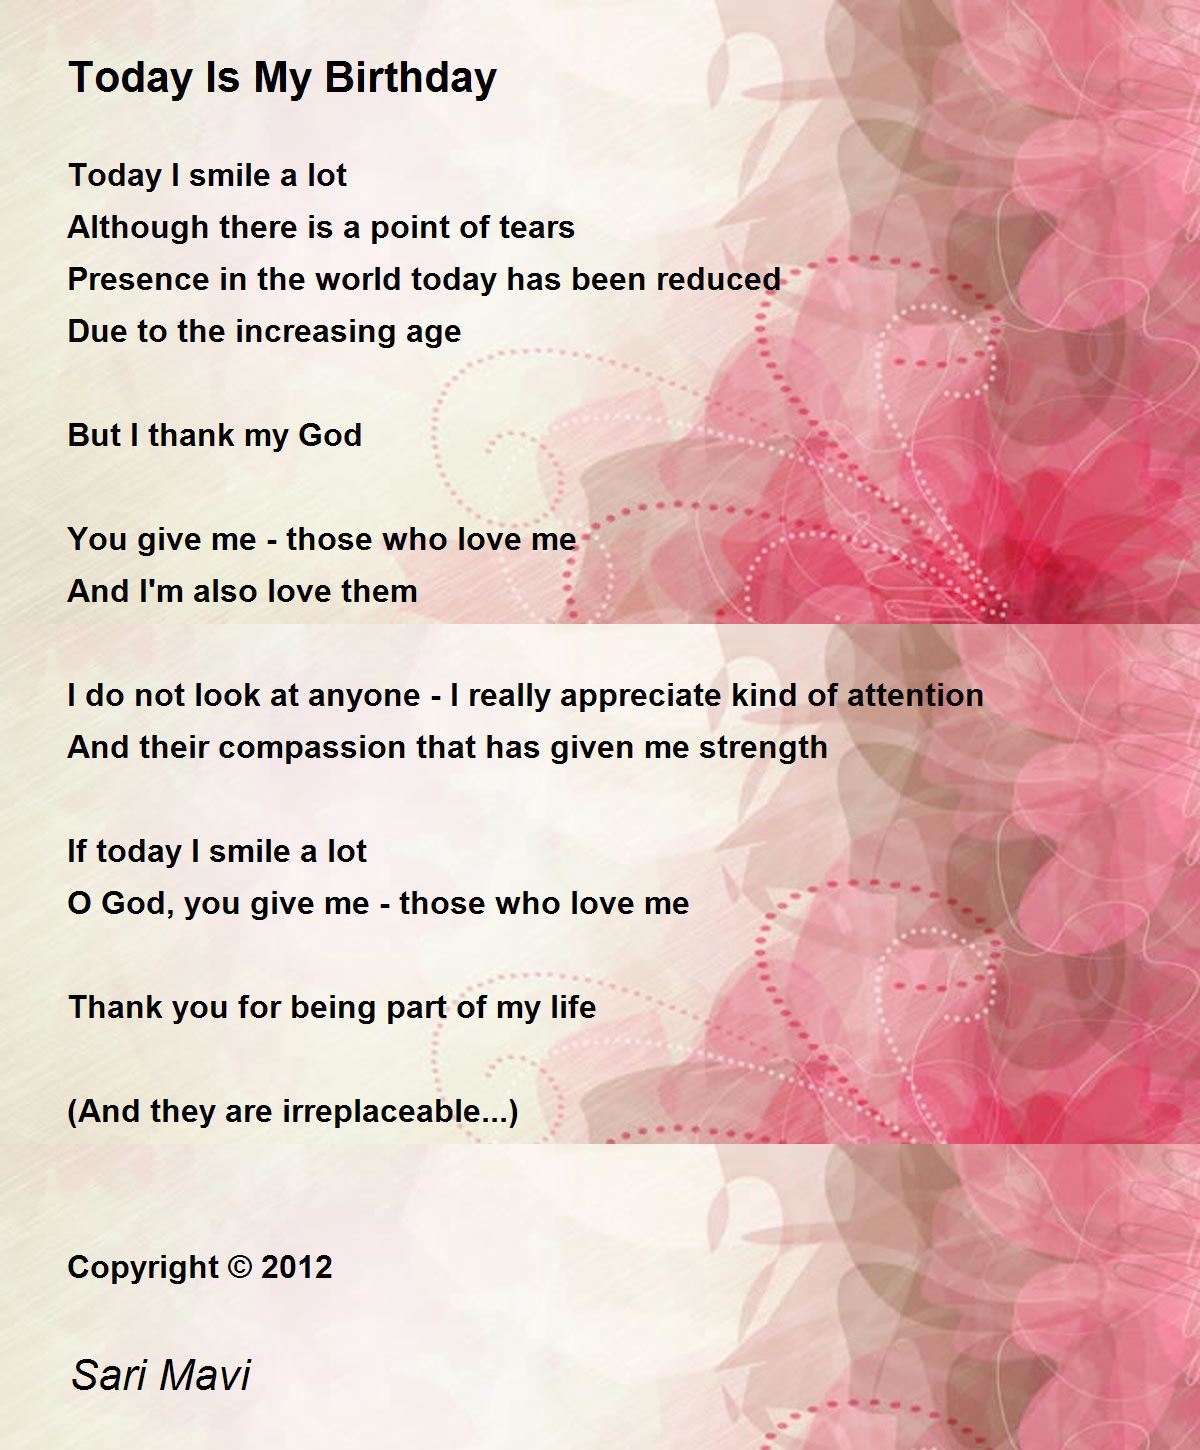 Today Is My Birthday - Today Is My Birthday Poem by Sari Mavi